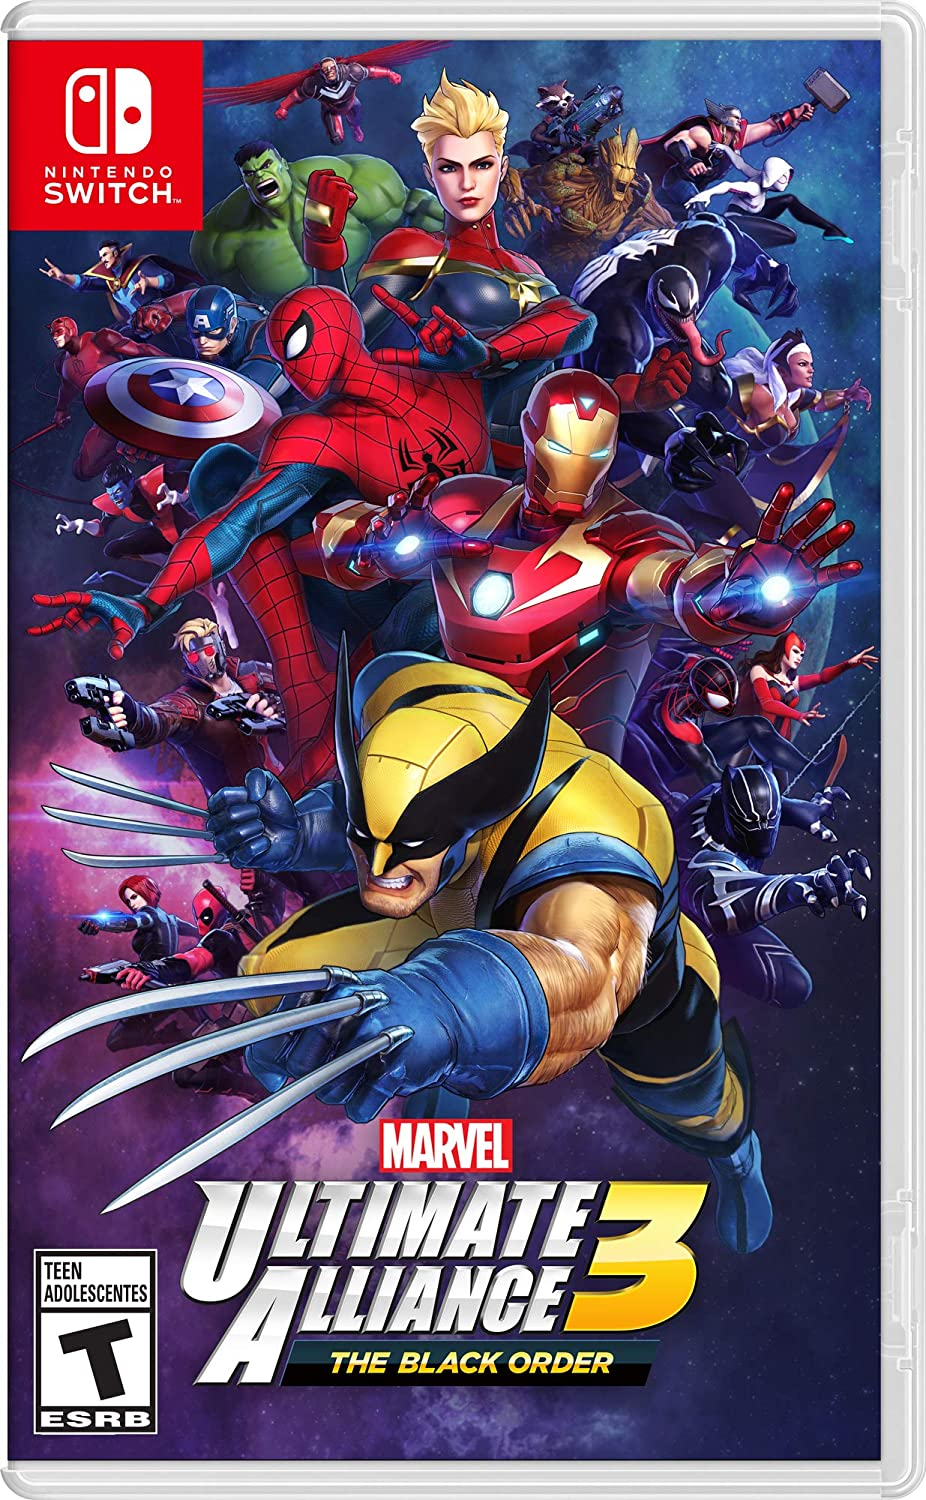 Amazon.com: Marvel Ultimate Alliance 3: The Black Order - Nintendo Switch : Nintendo of America: Everything Else $39.99